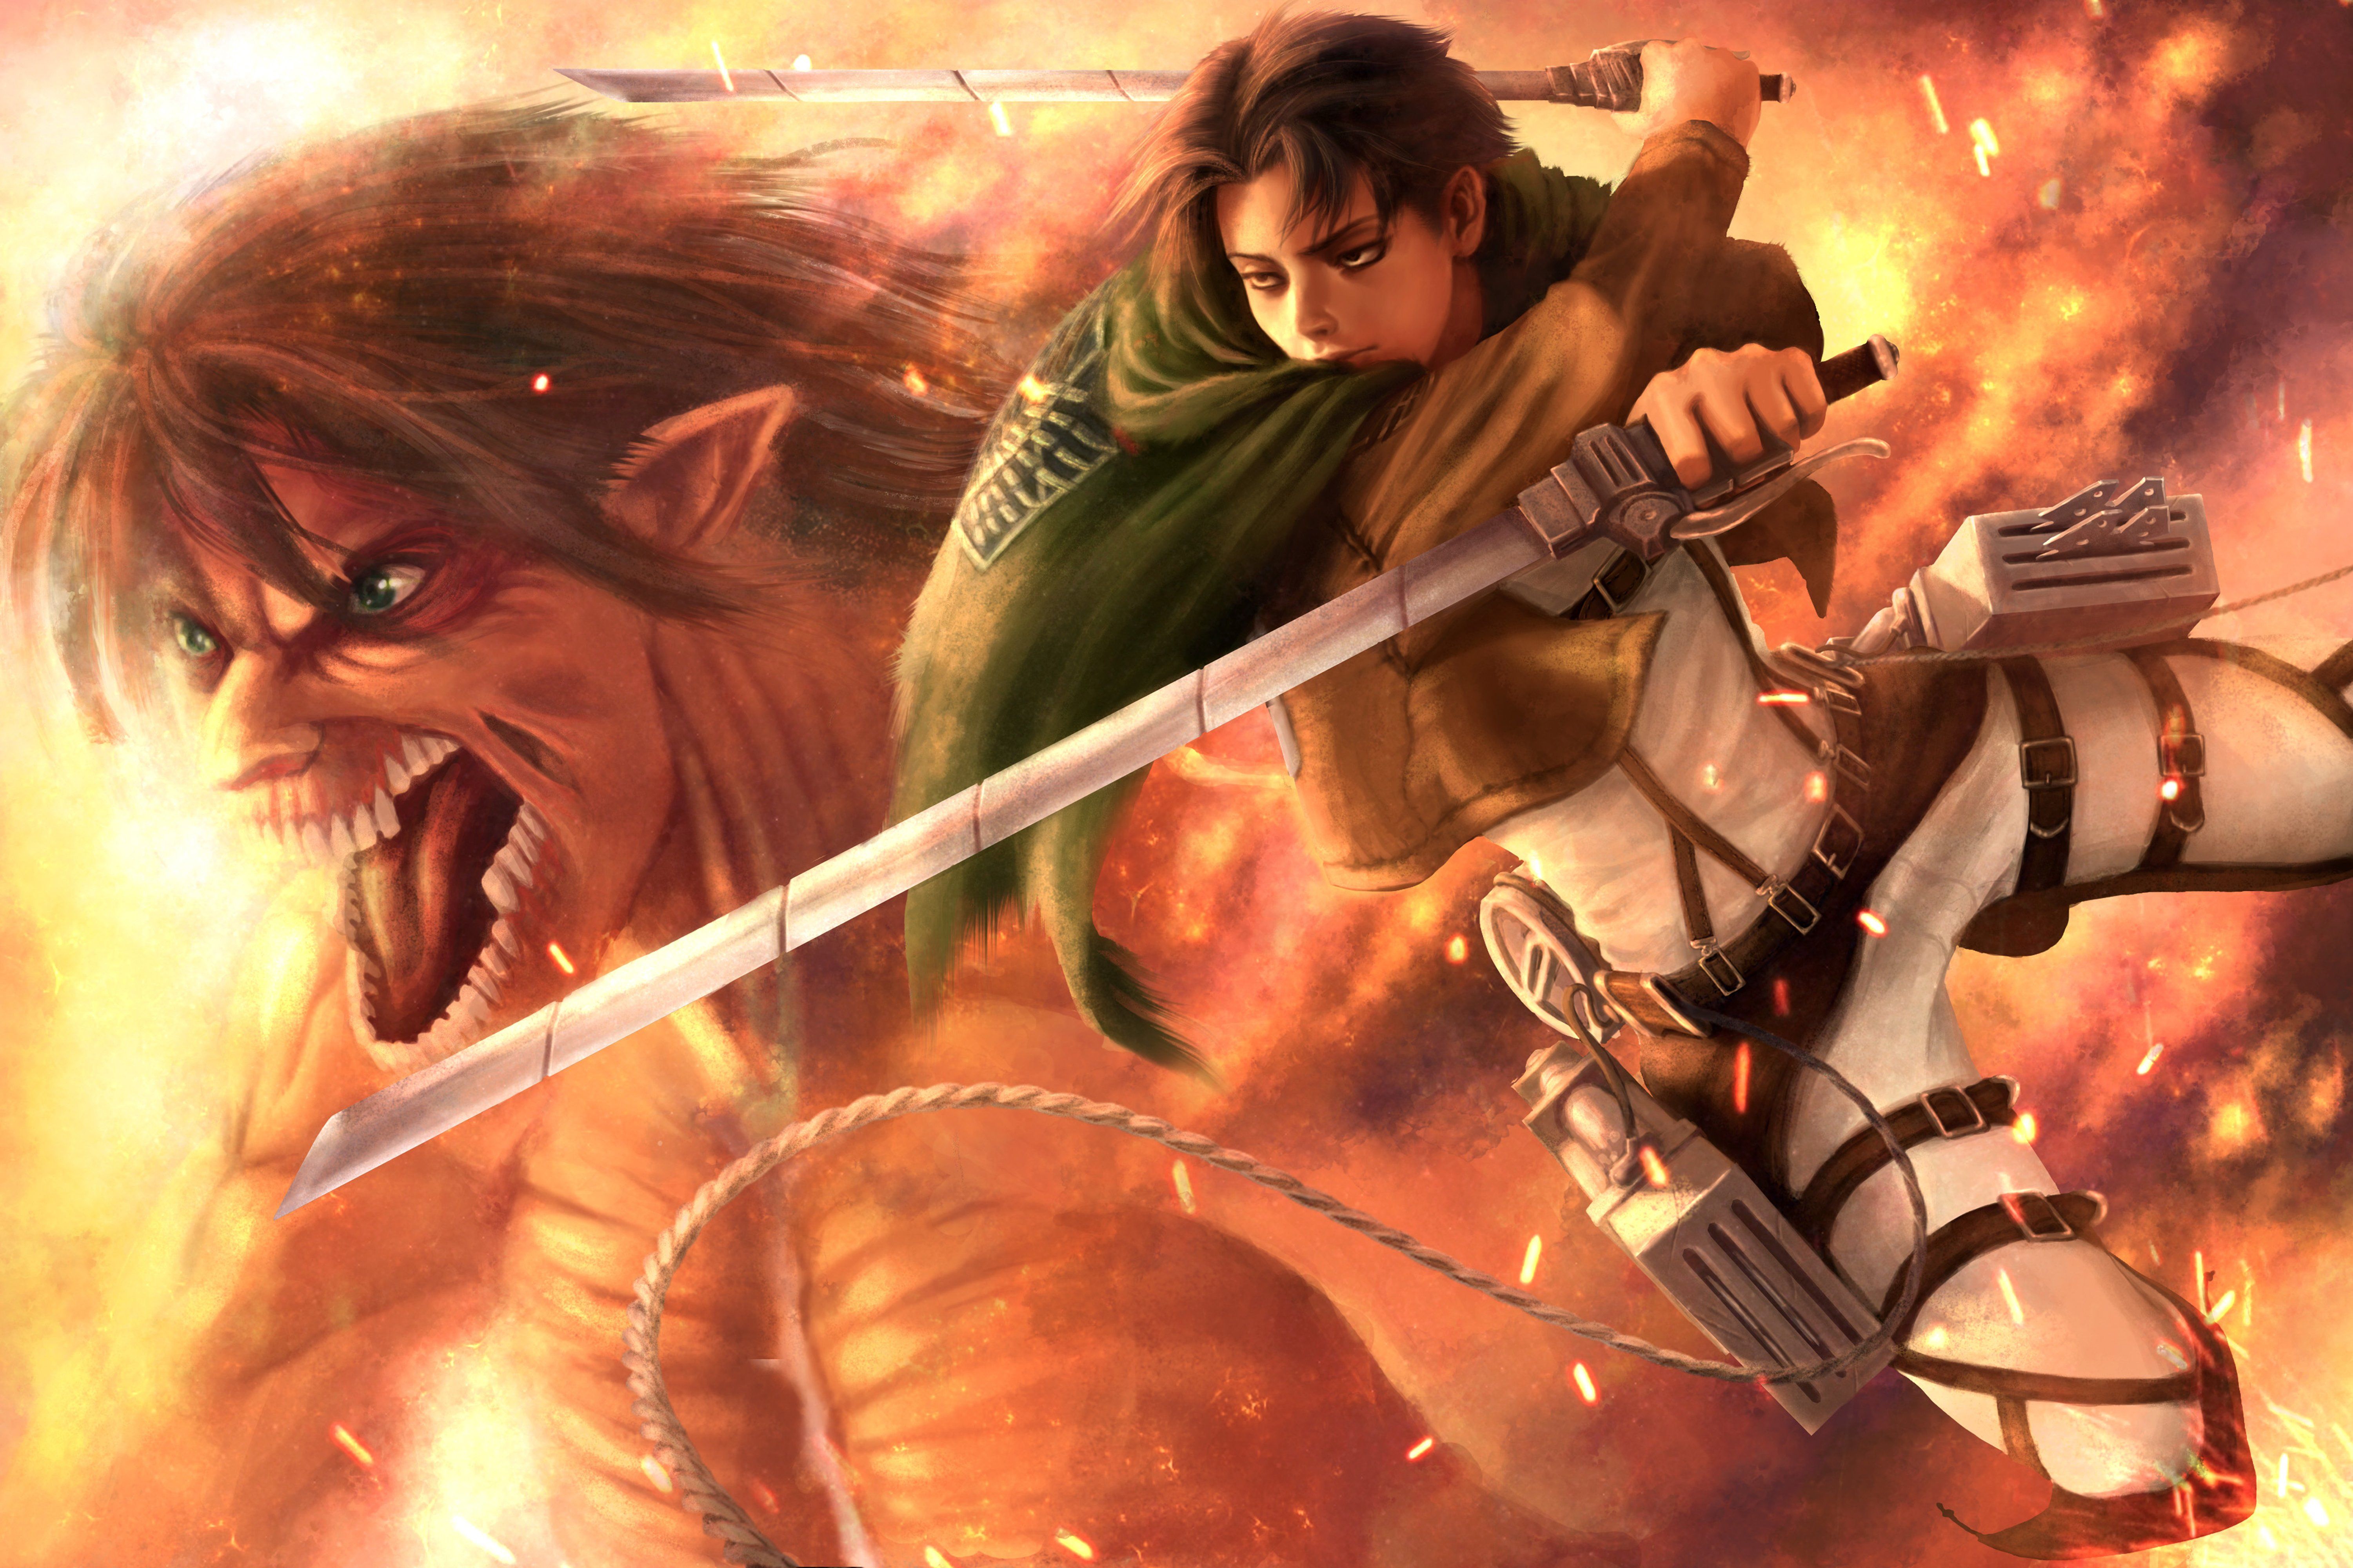 Battles Warriors Monsters Attack on titan Levi Guys Swords Anime wallpaperx4000